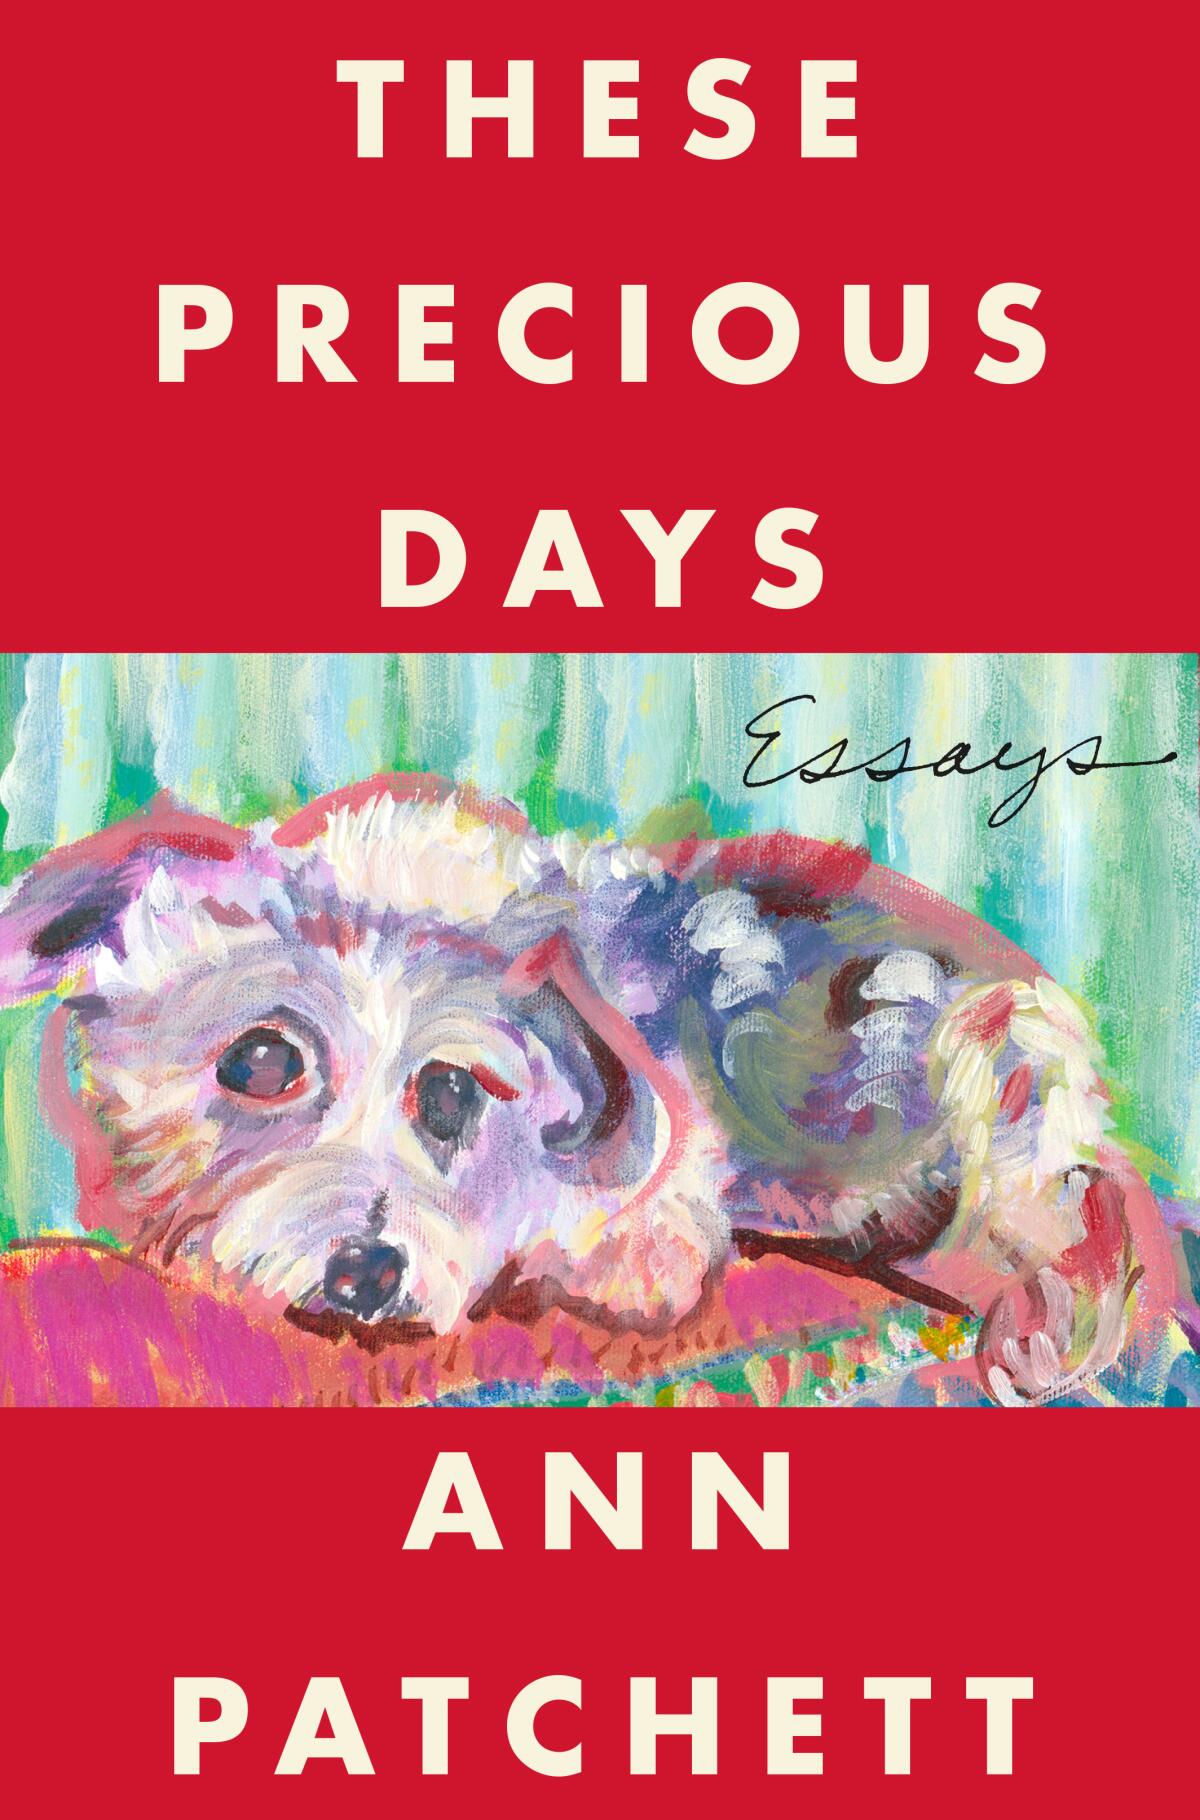 "These Precious Days," by Ann Patchett